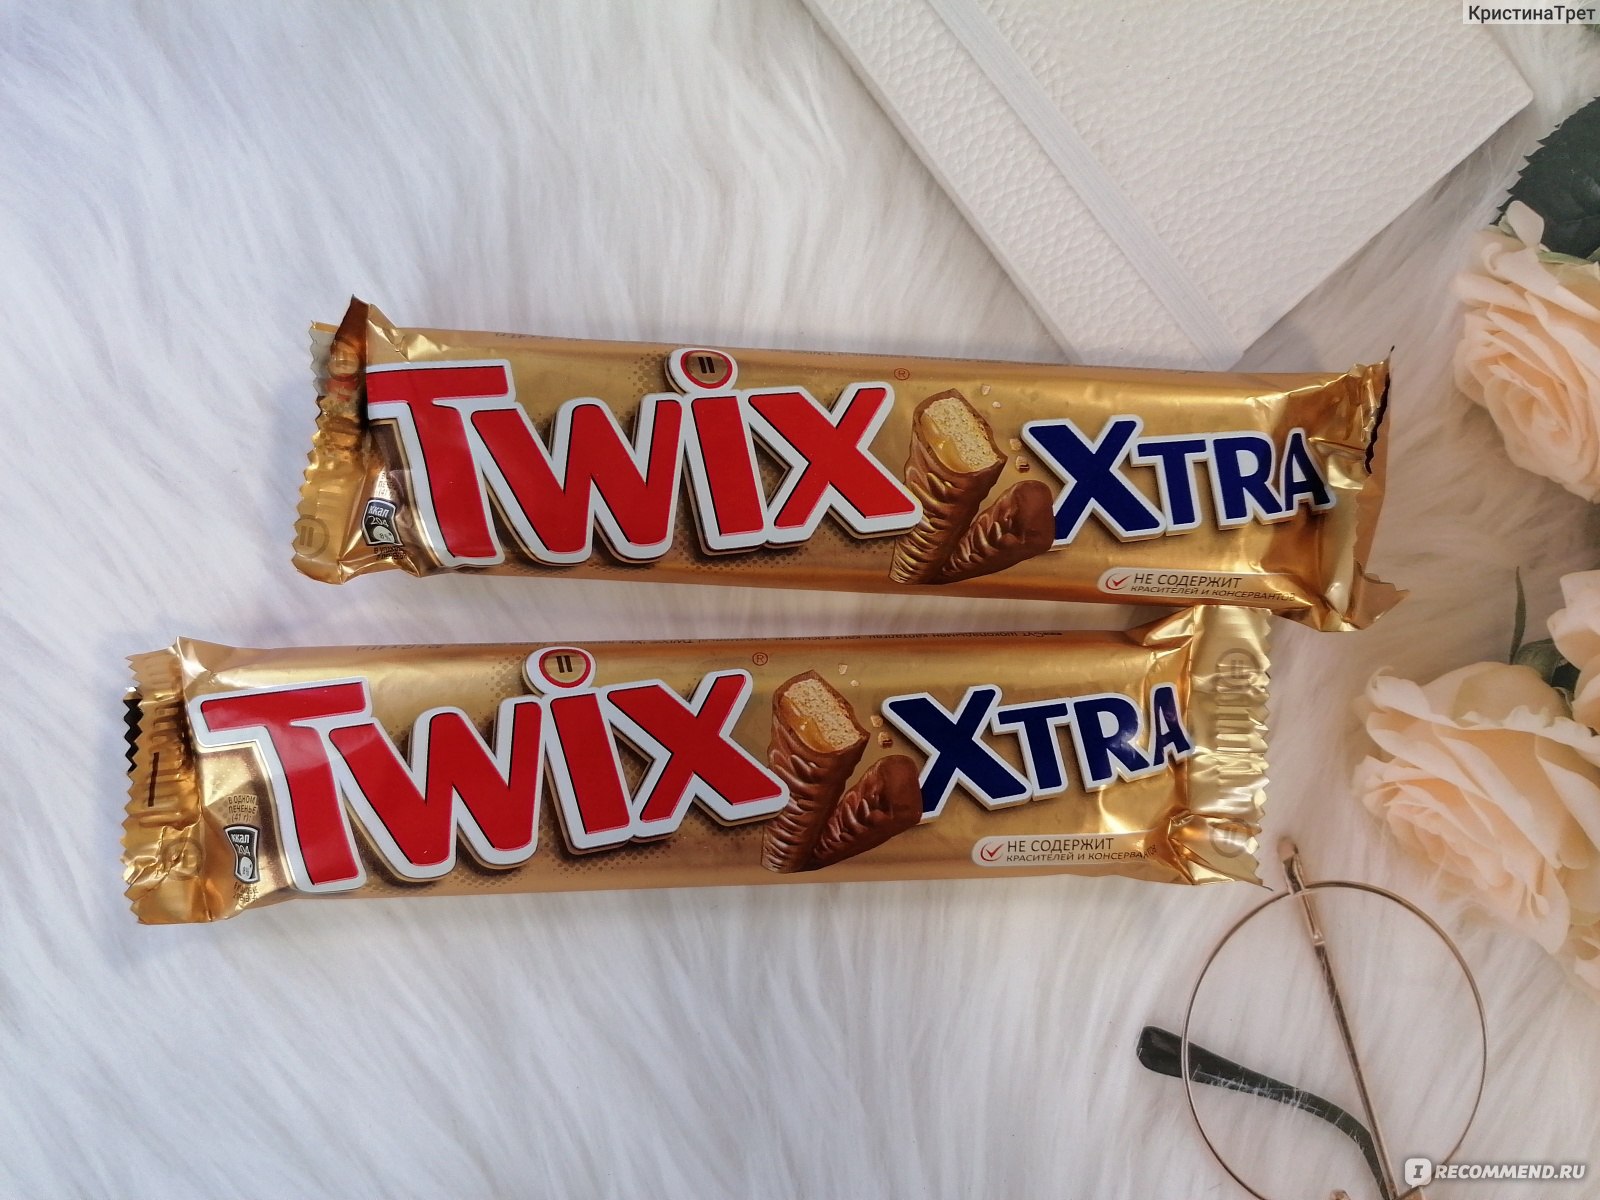 Шоколад Mars TWIX - «Сделаем паузу.... Twix Xtra» | отзывы